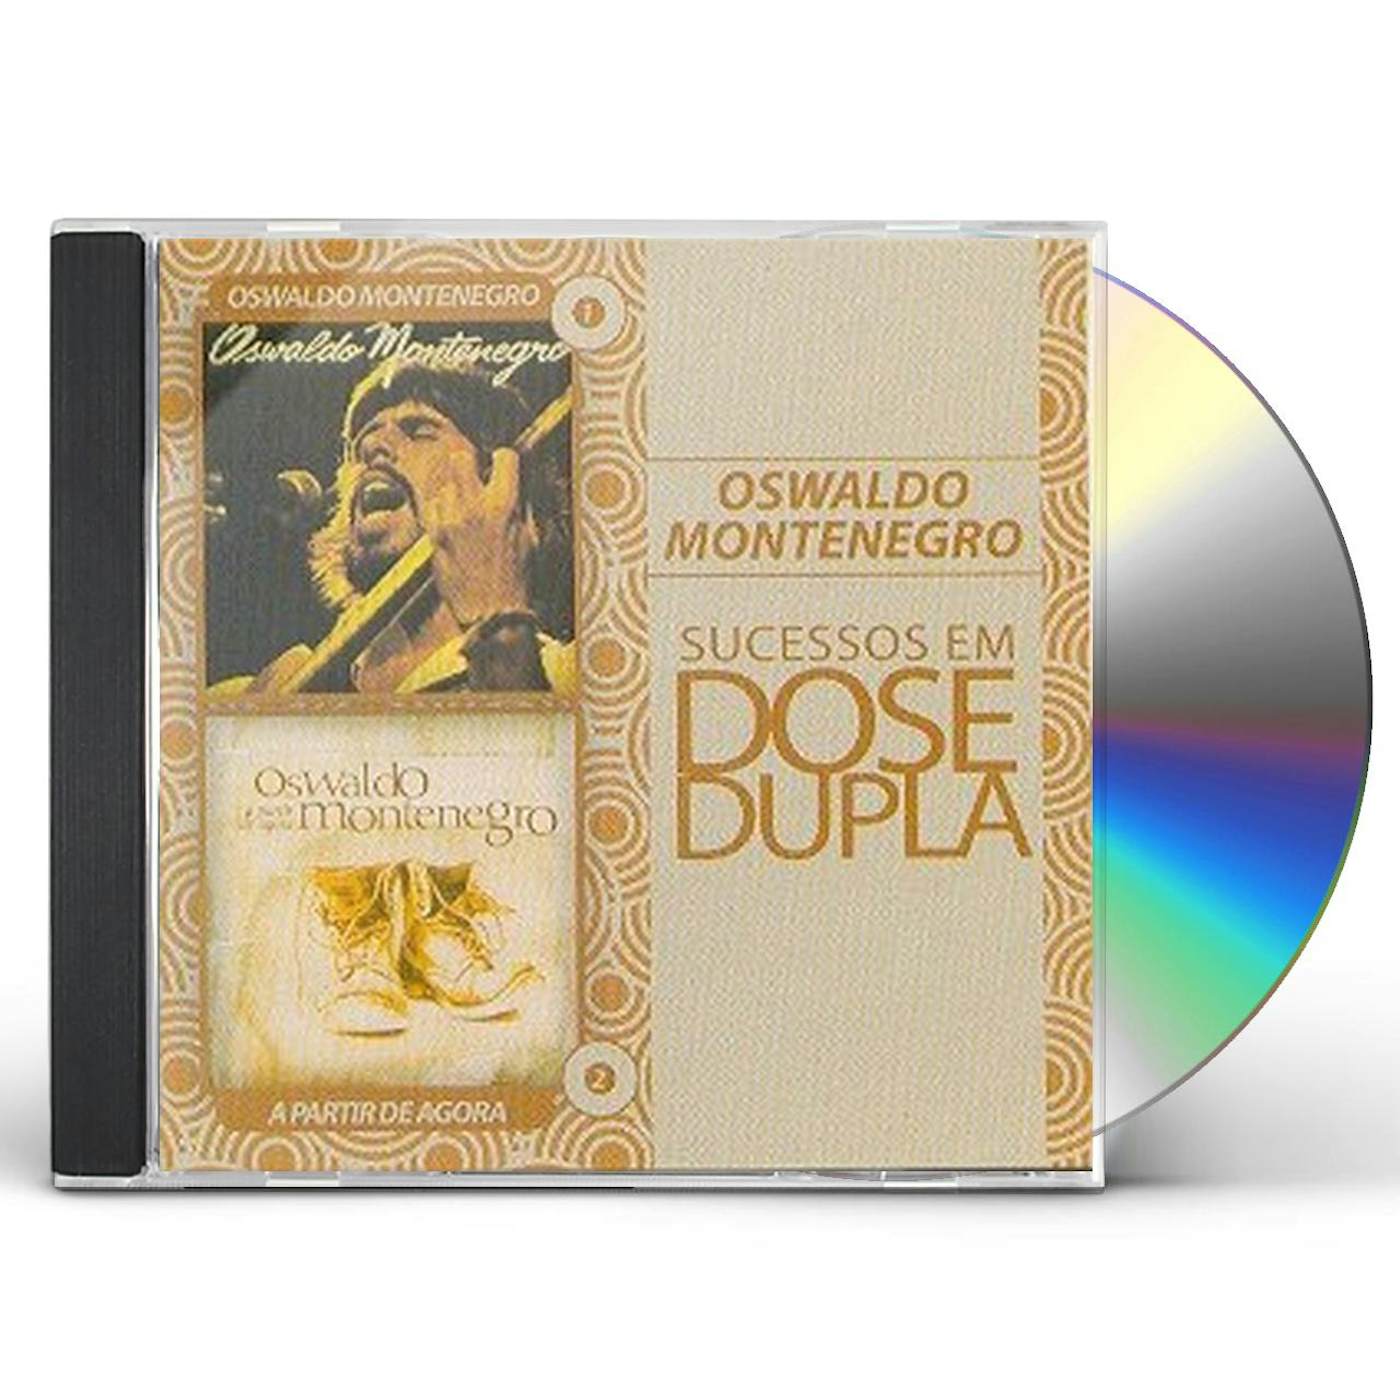 Oswaldo Montenegro DOSE DUPLA 2 CD